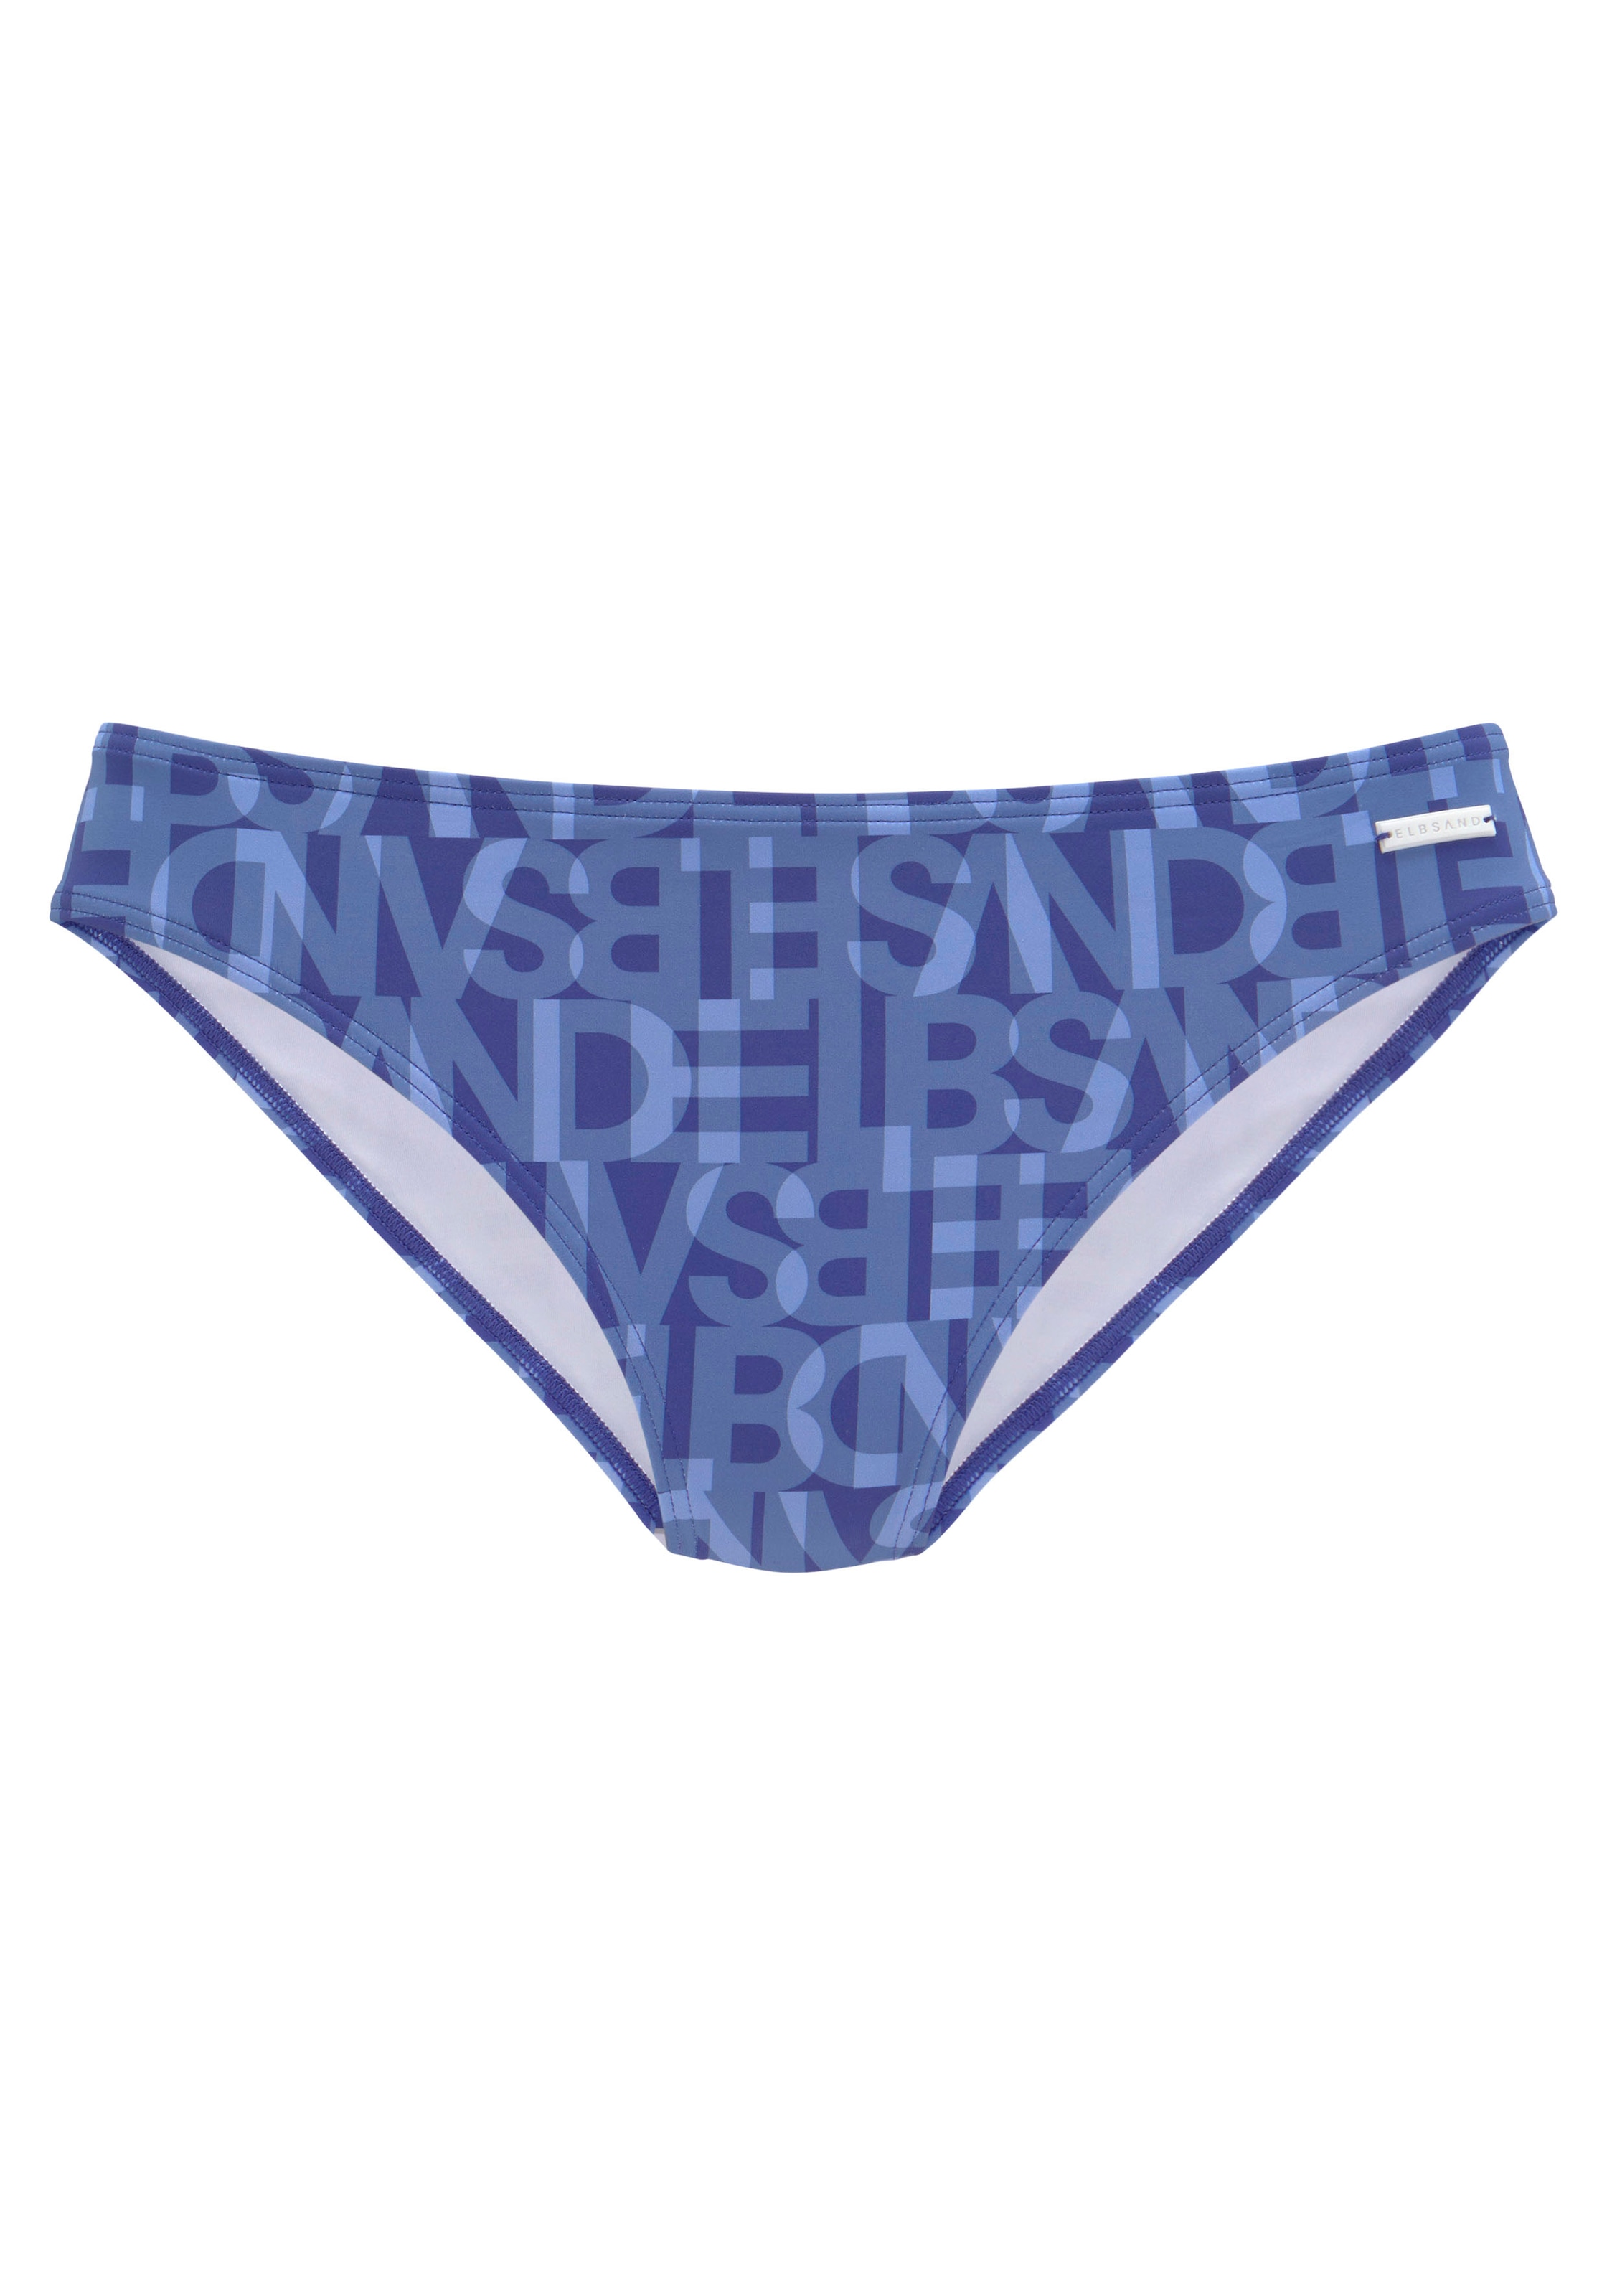 Elbsand Bikini-Hose »Letra«, mit tollem Wording